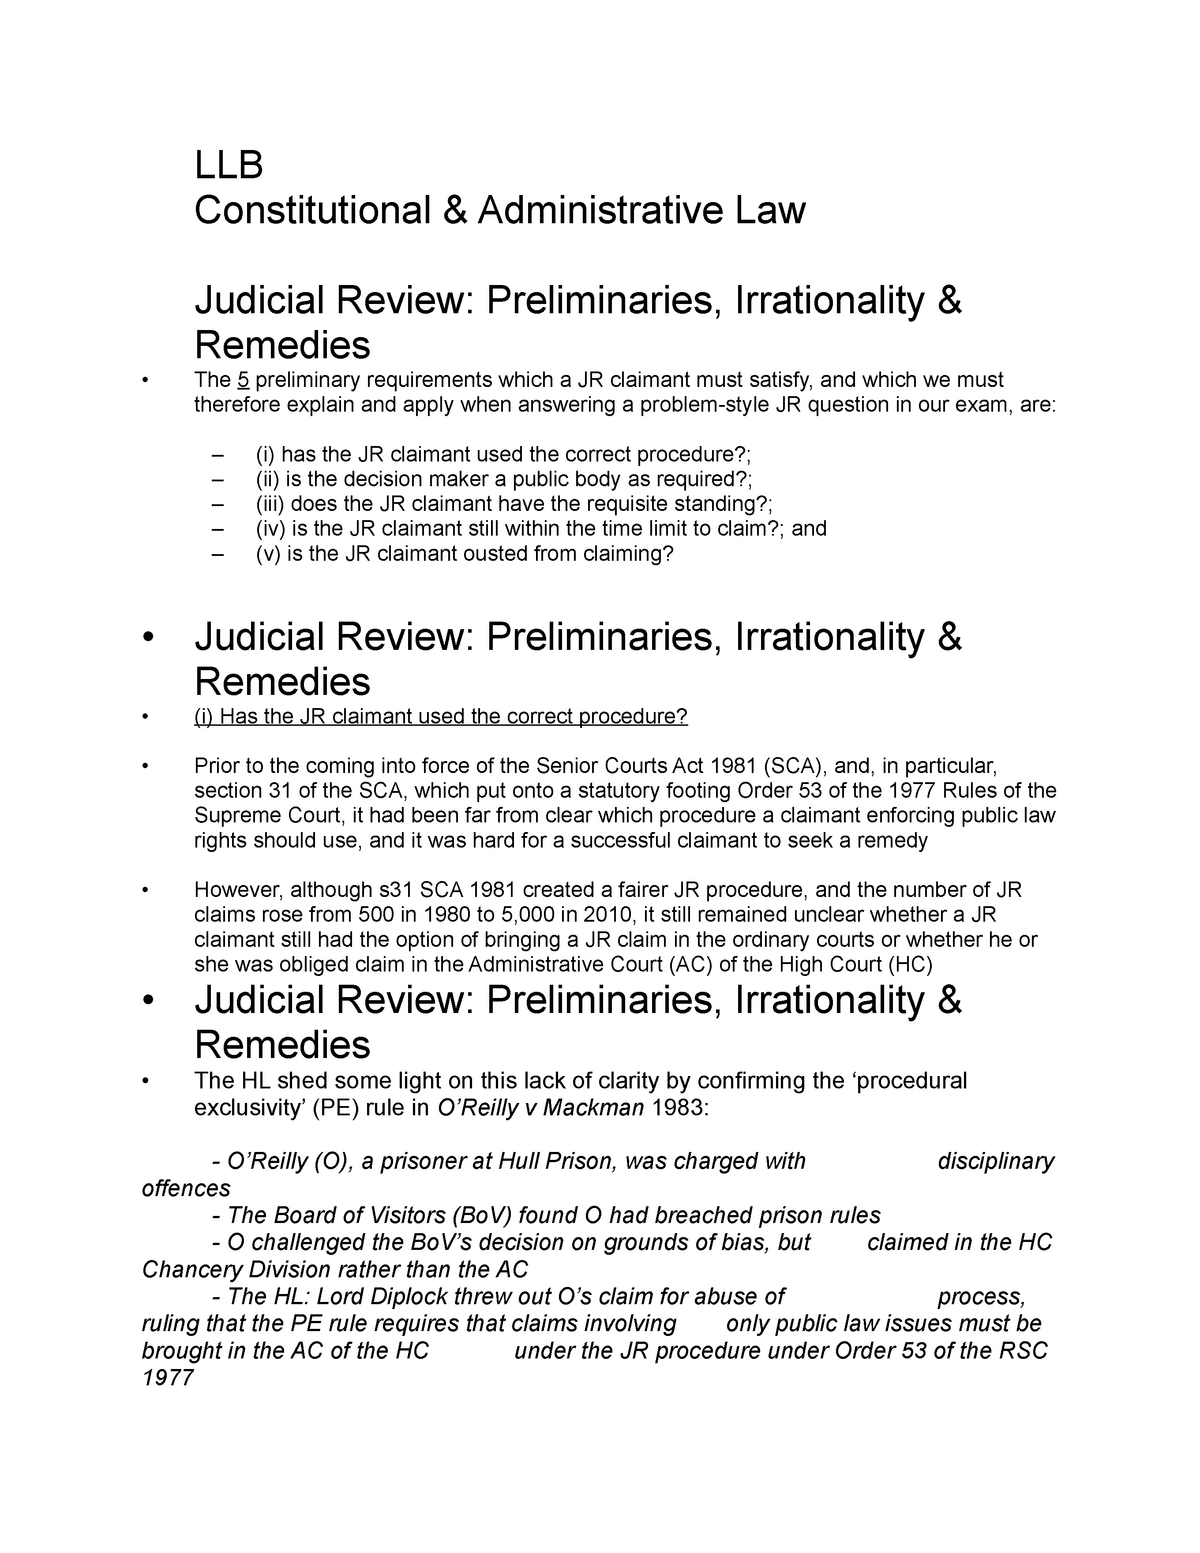 judicial review essay example